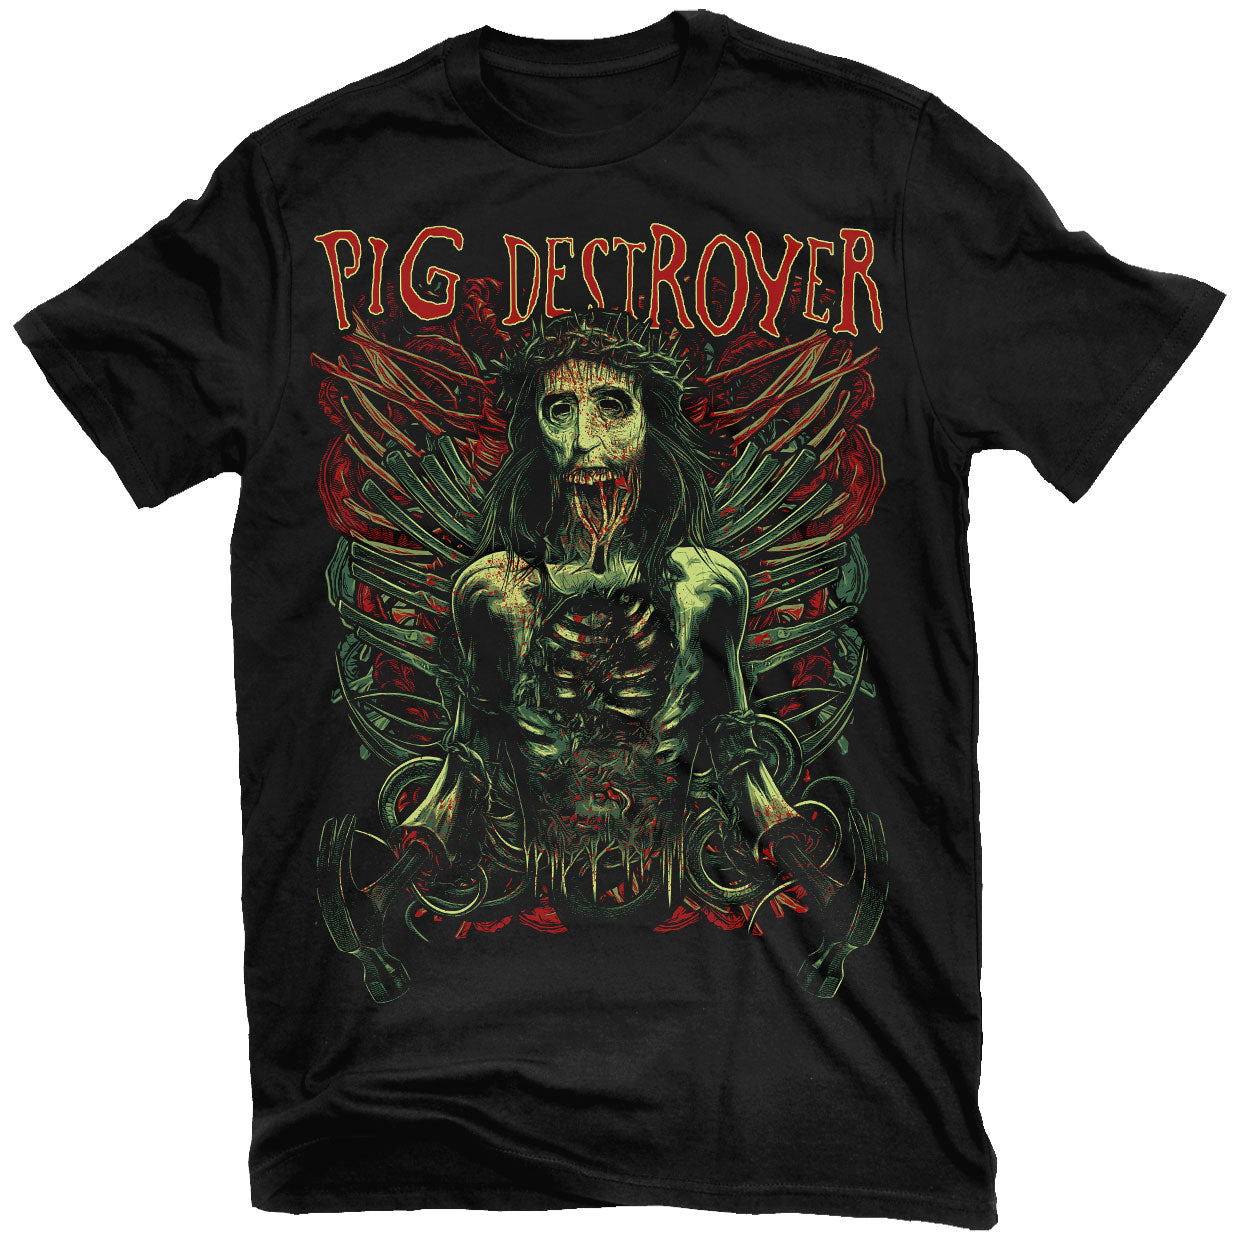 Pig Destroyer "Hammerchrist" T-Shirt